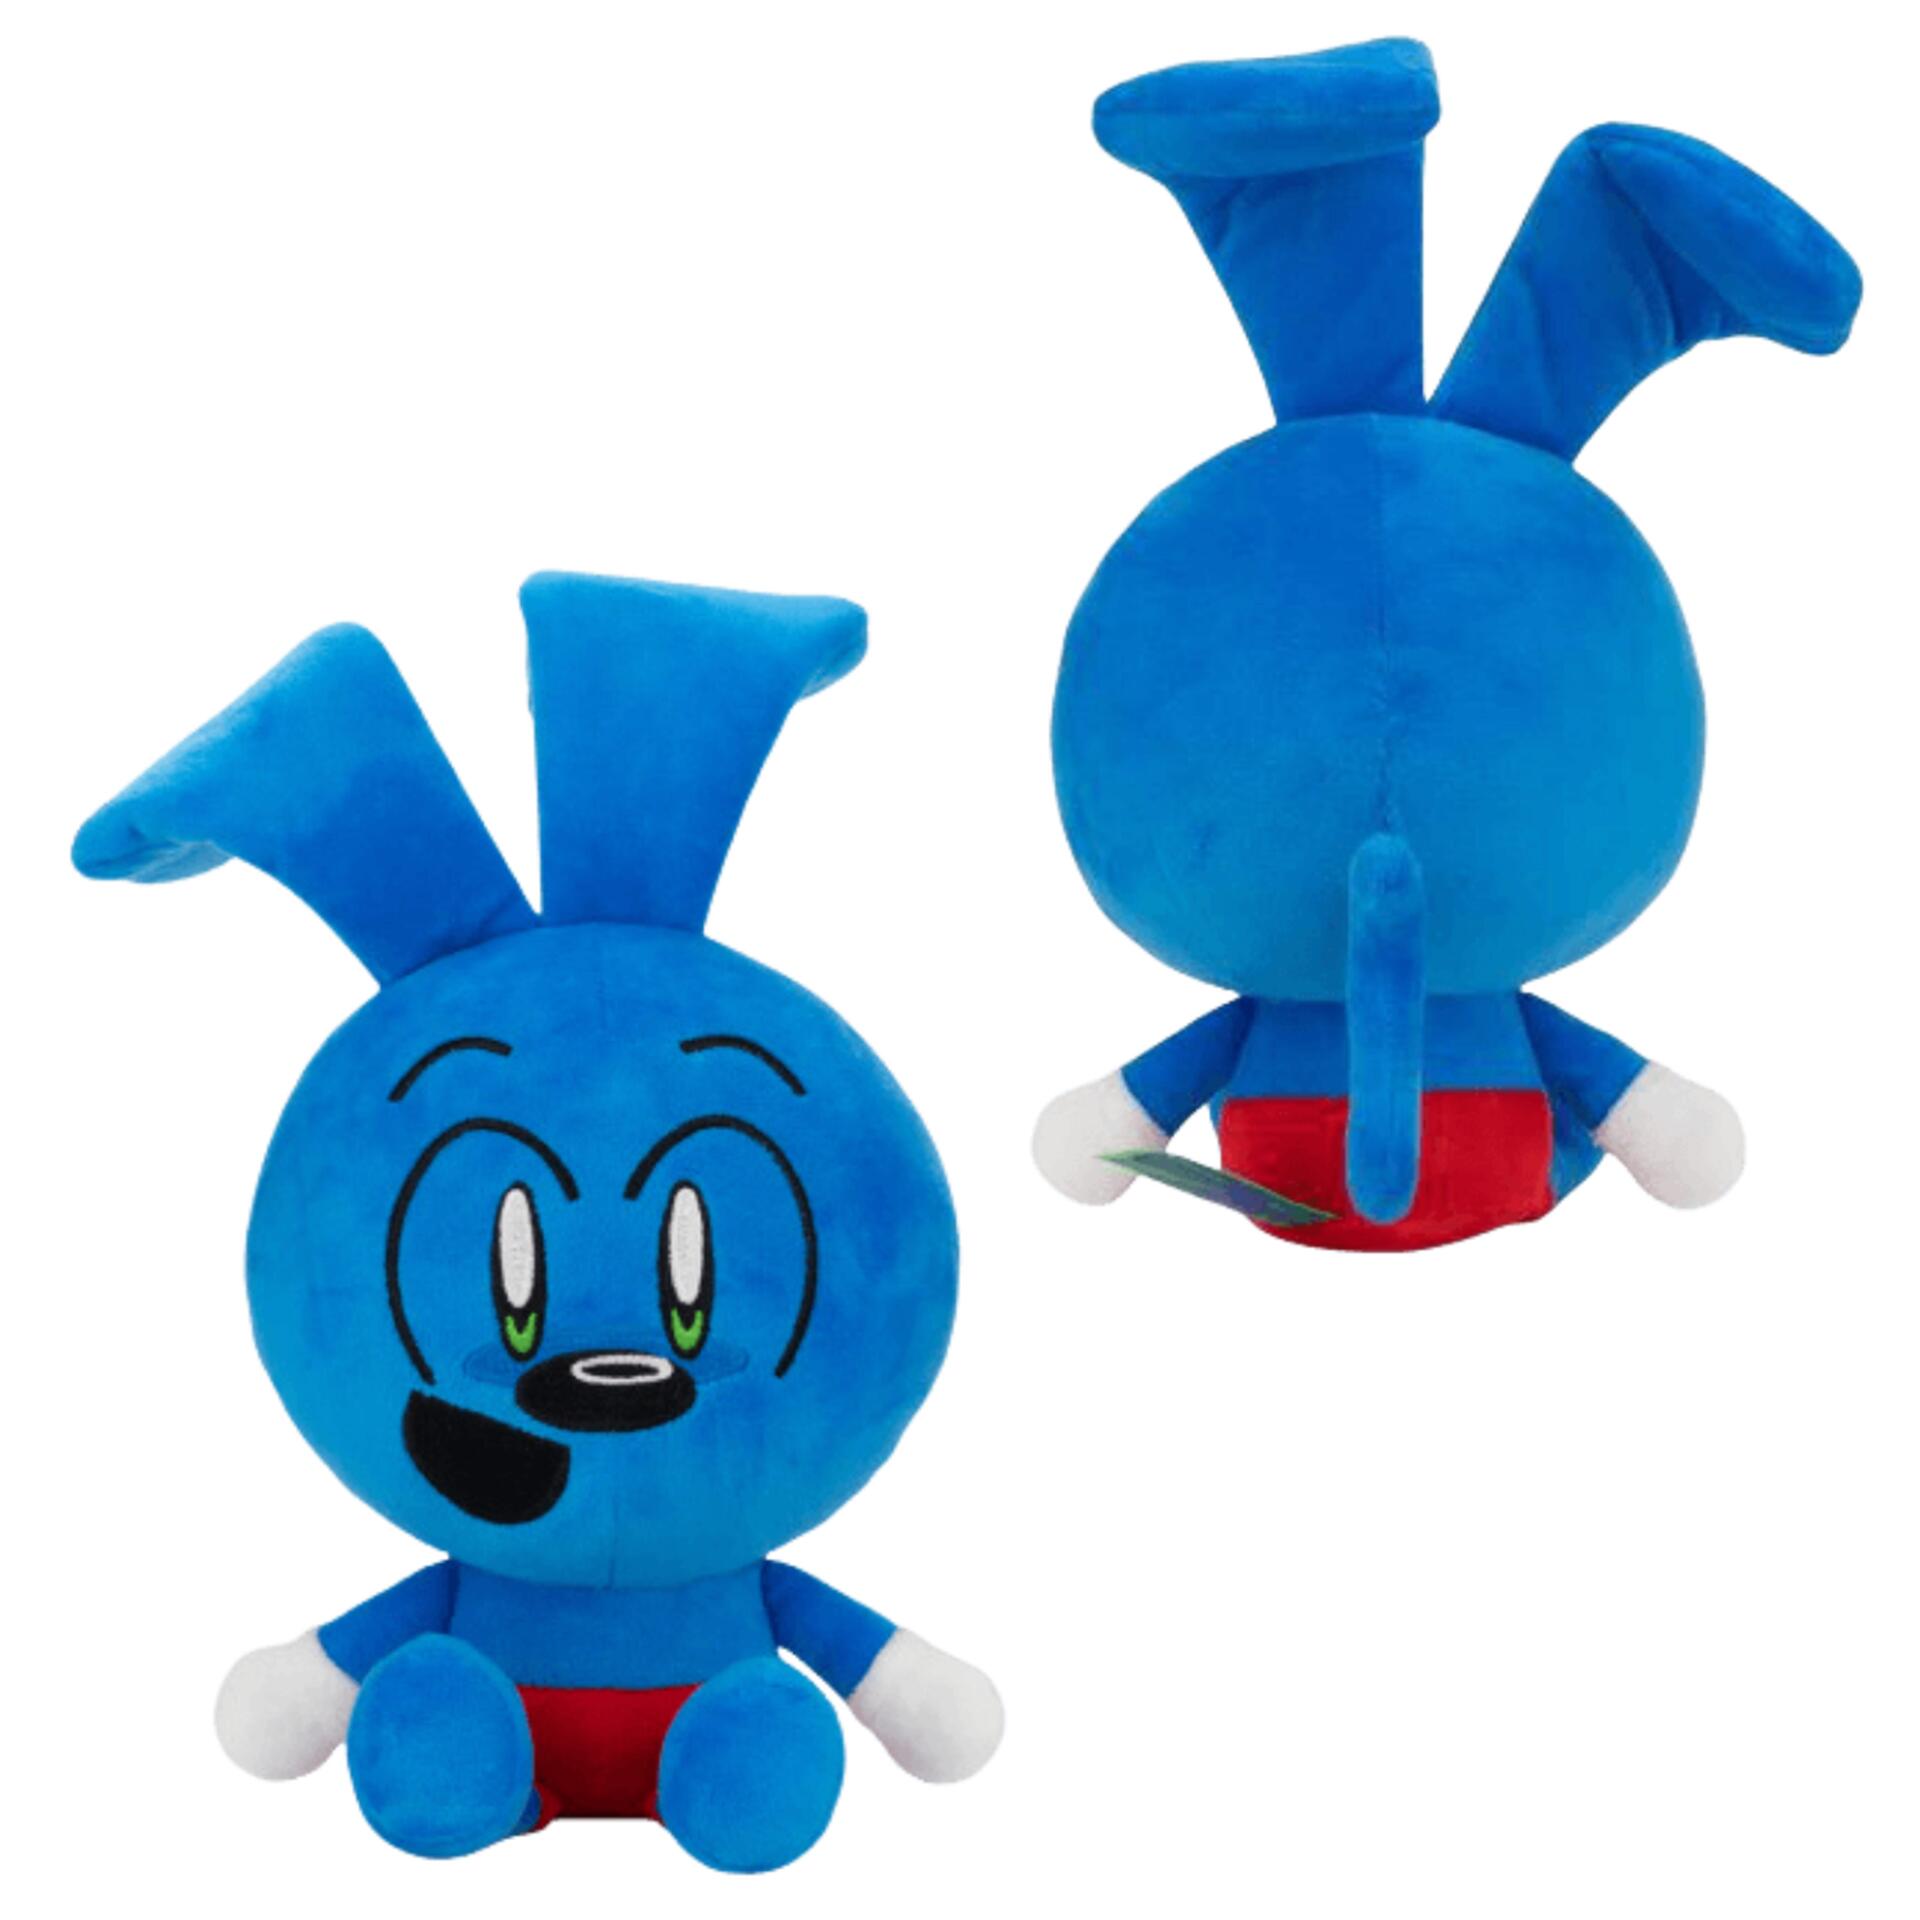 Bunzo Bunny Playtime Plush, 16 Bunzo Bunny Plushie Toy for Game